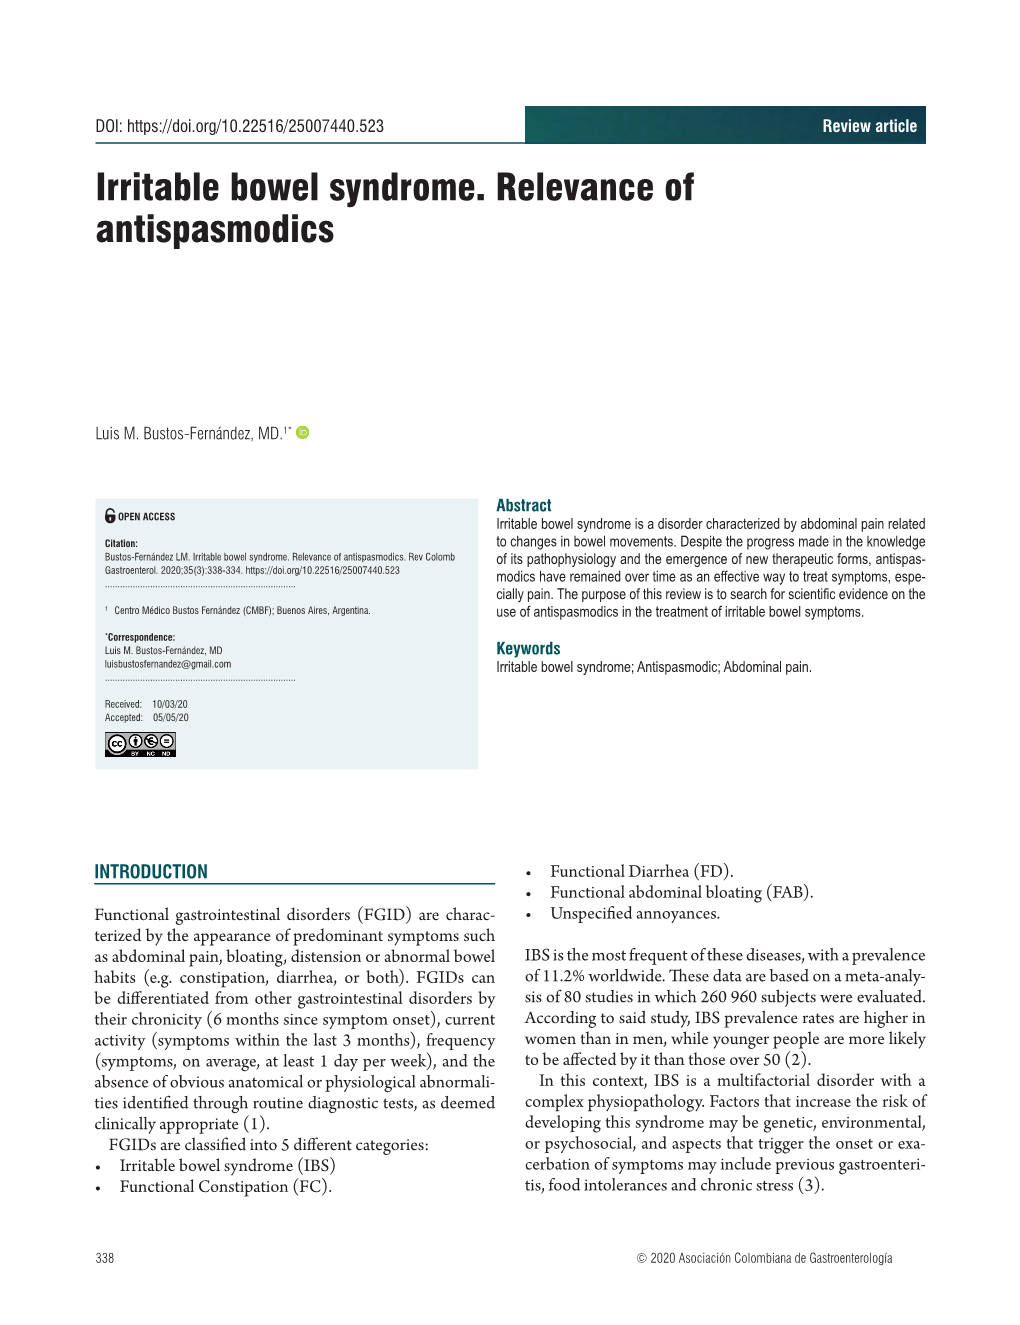 Irritable Bowel Syndrome. Relevance of Antispasmodics